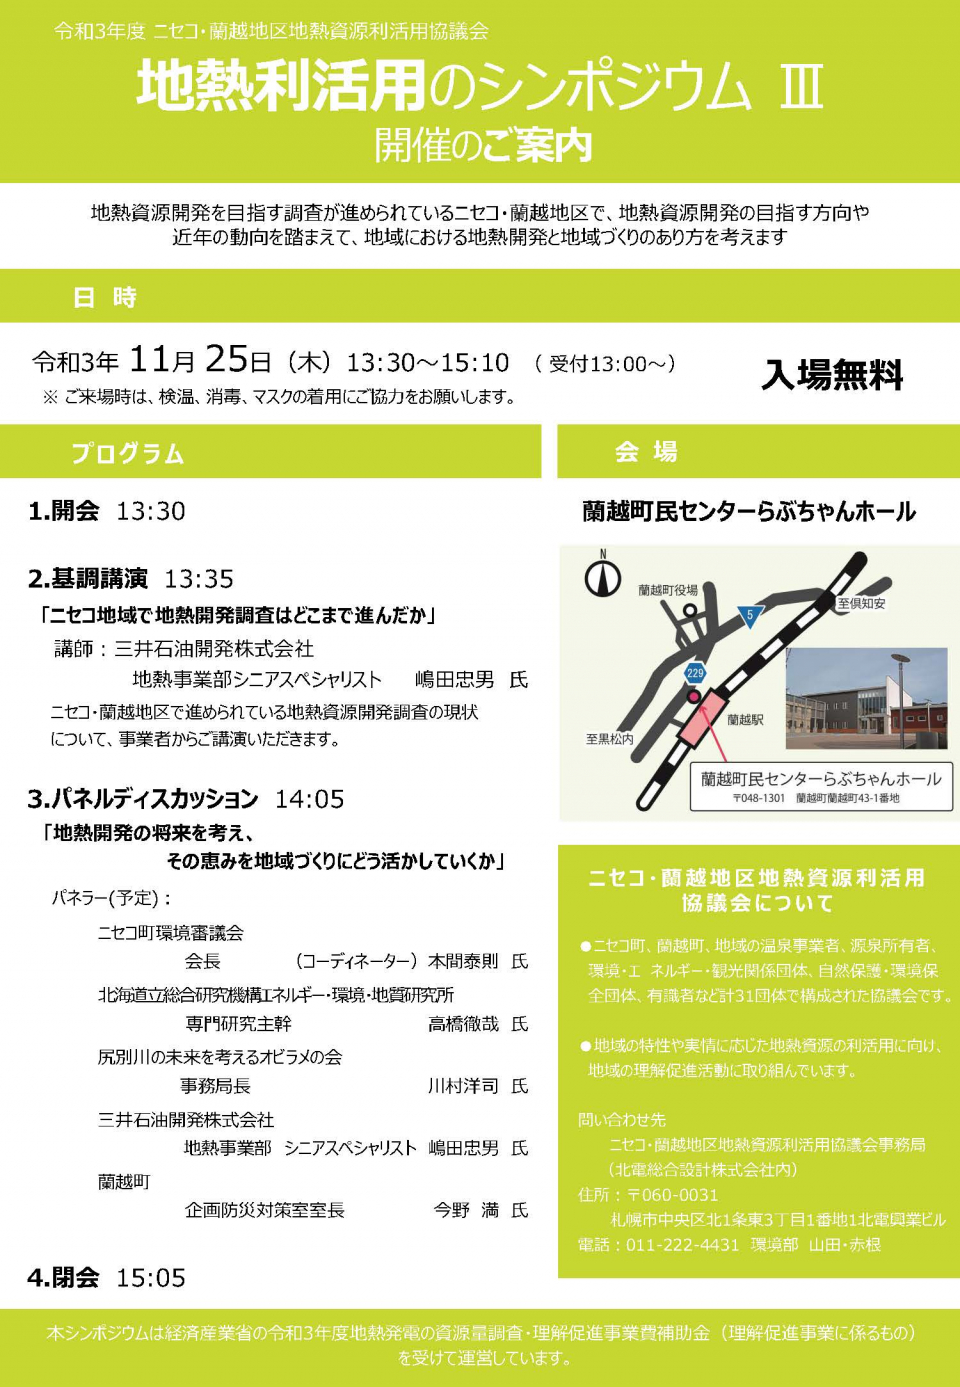 Geothermal utilization symposium (flyer)